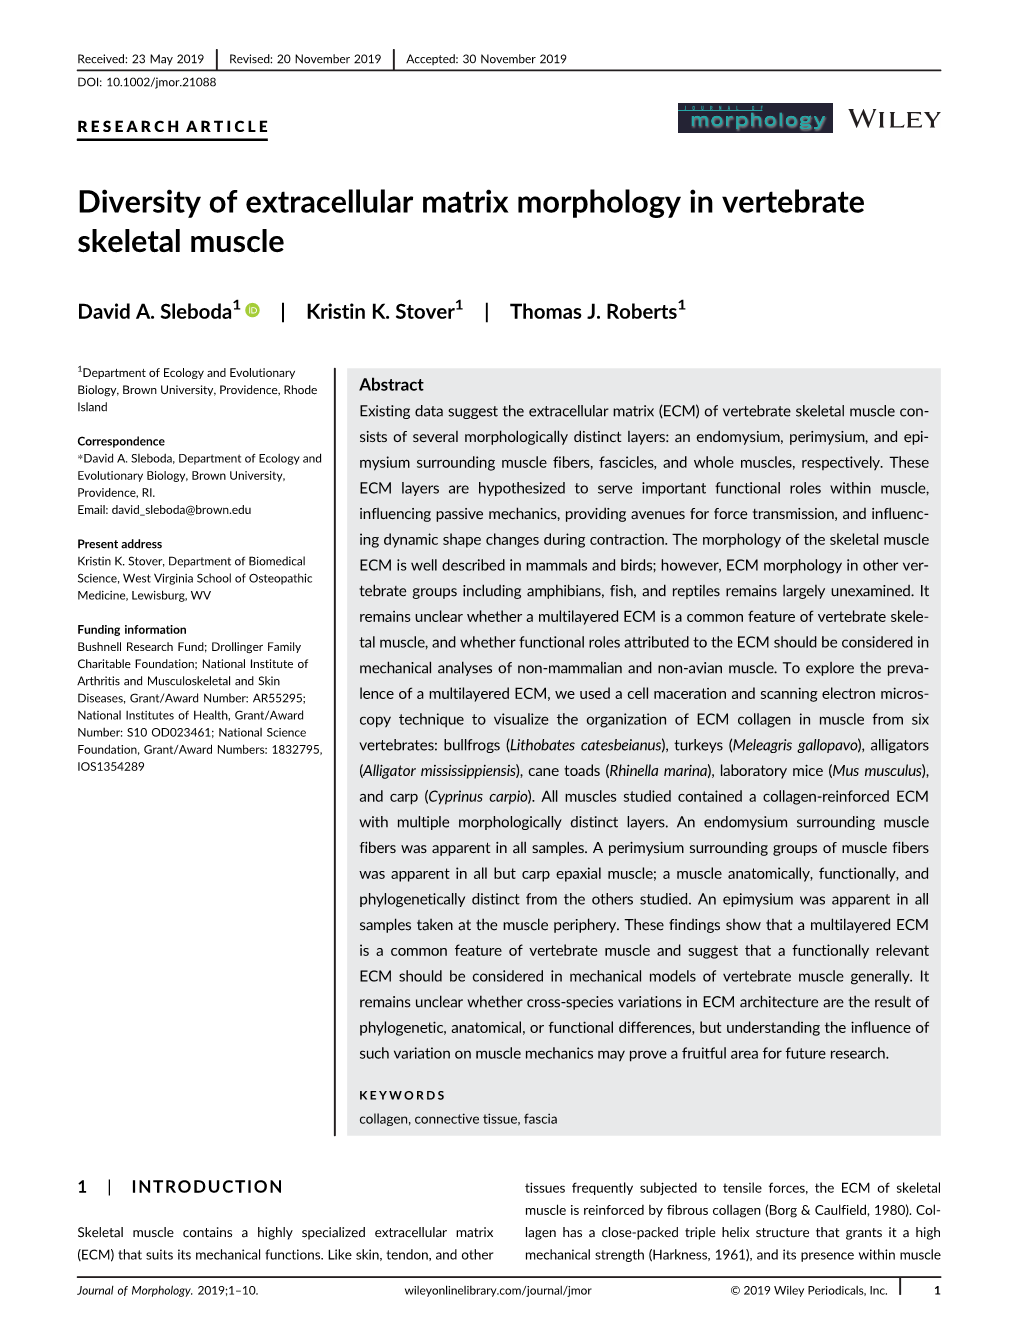 Diversity of Extracellular Matrix Morphology in Vertebrate Skeletal Muscle